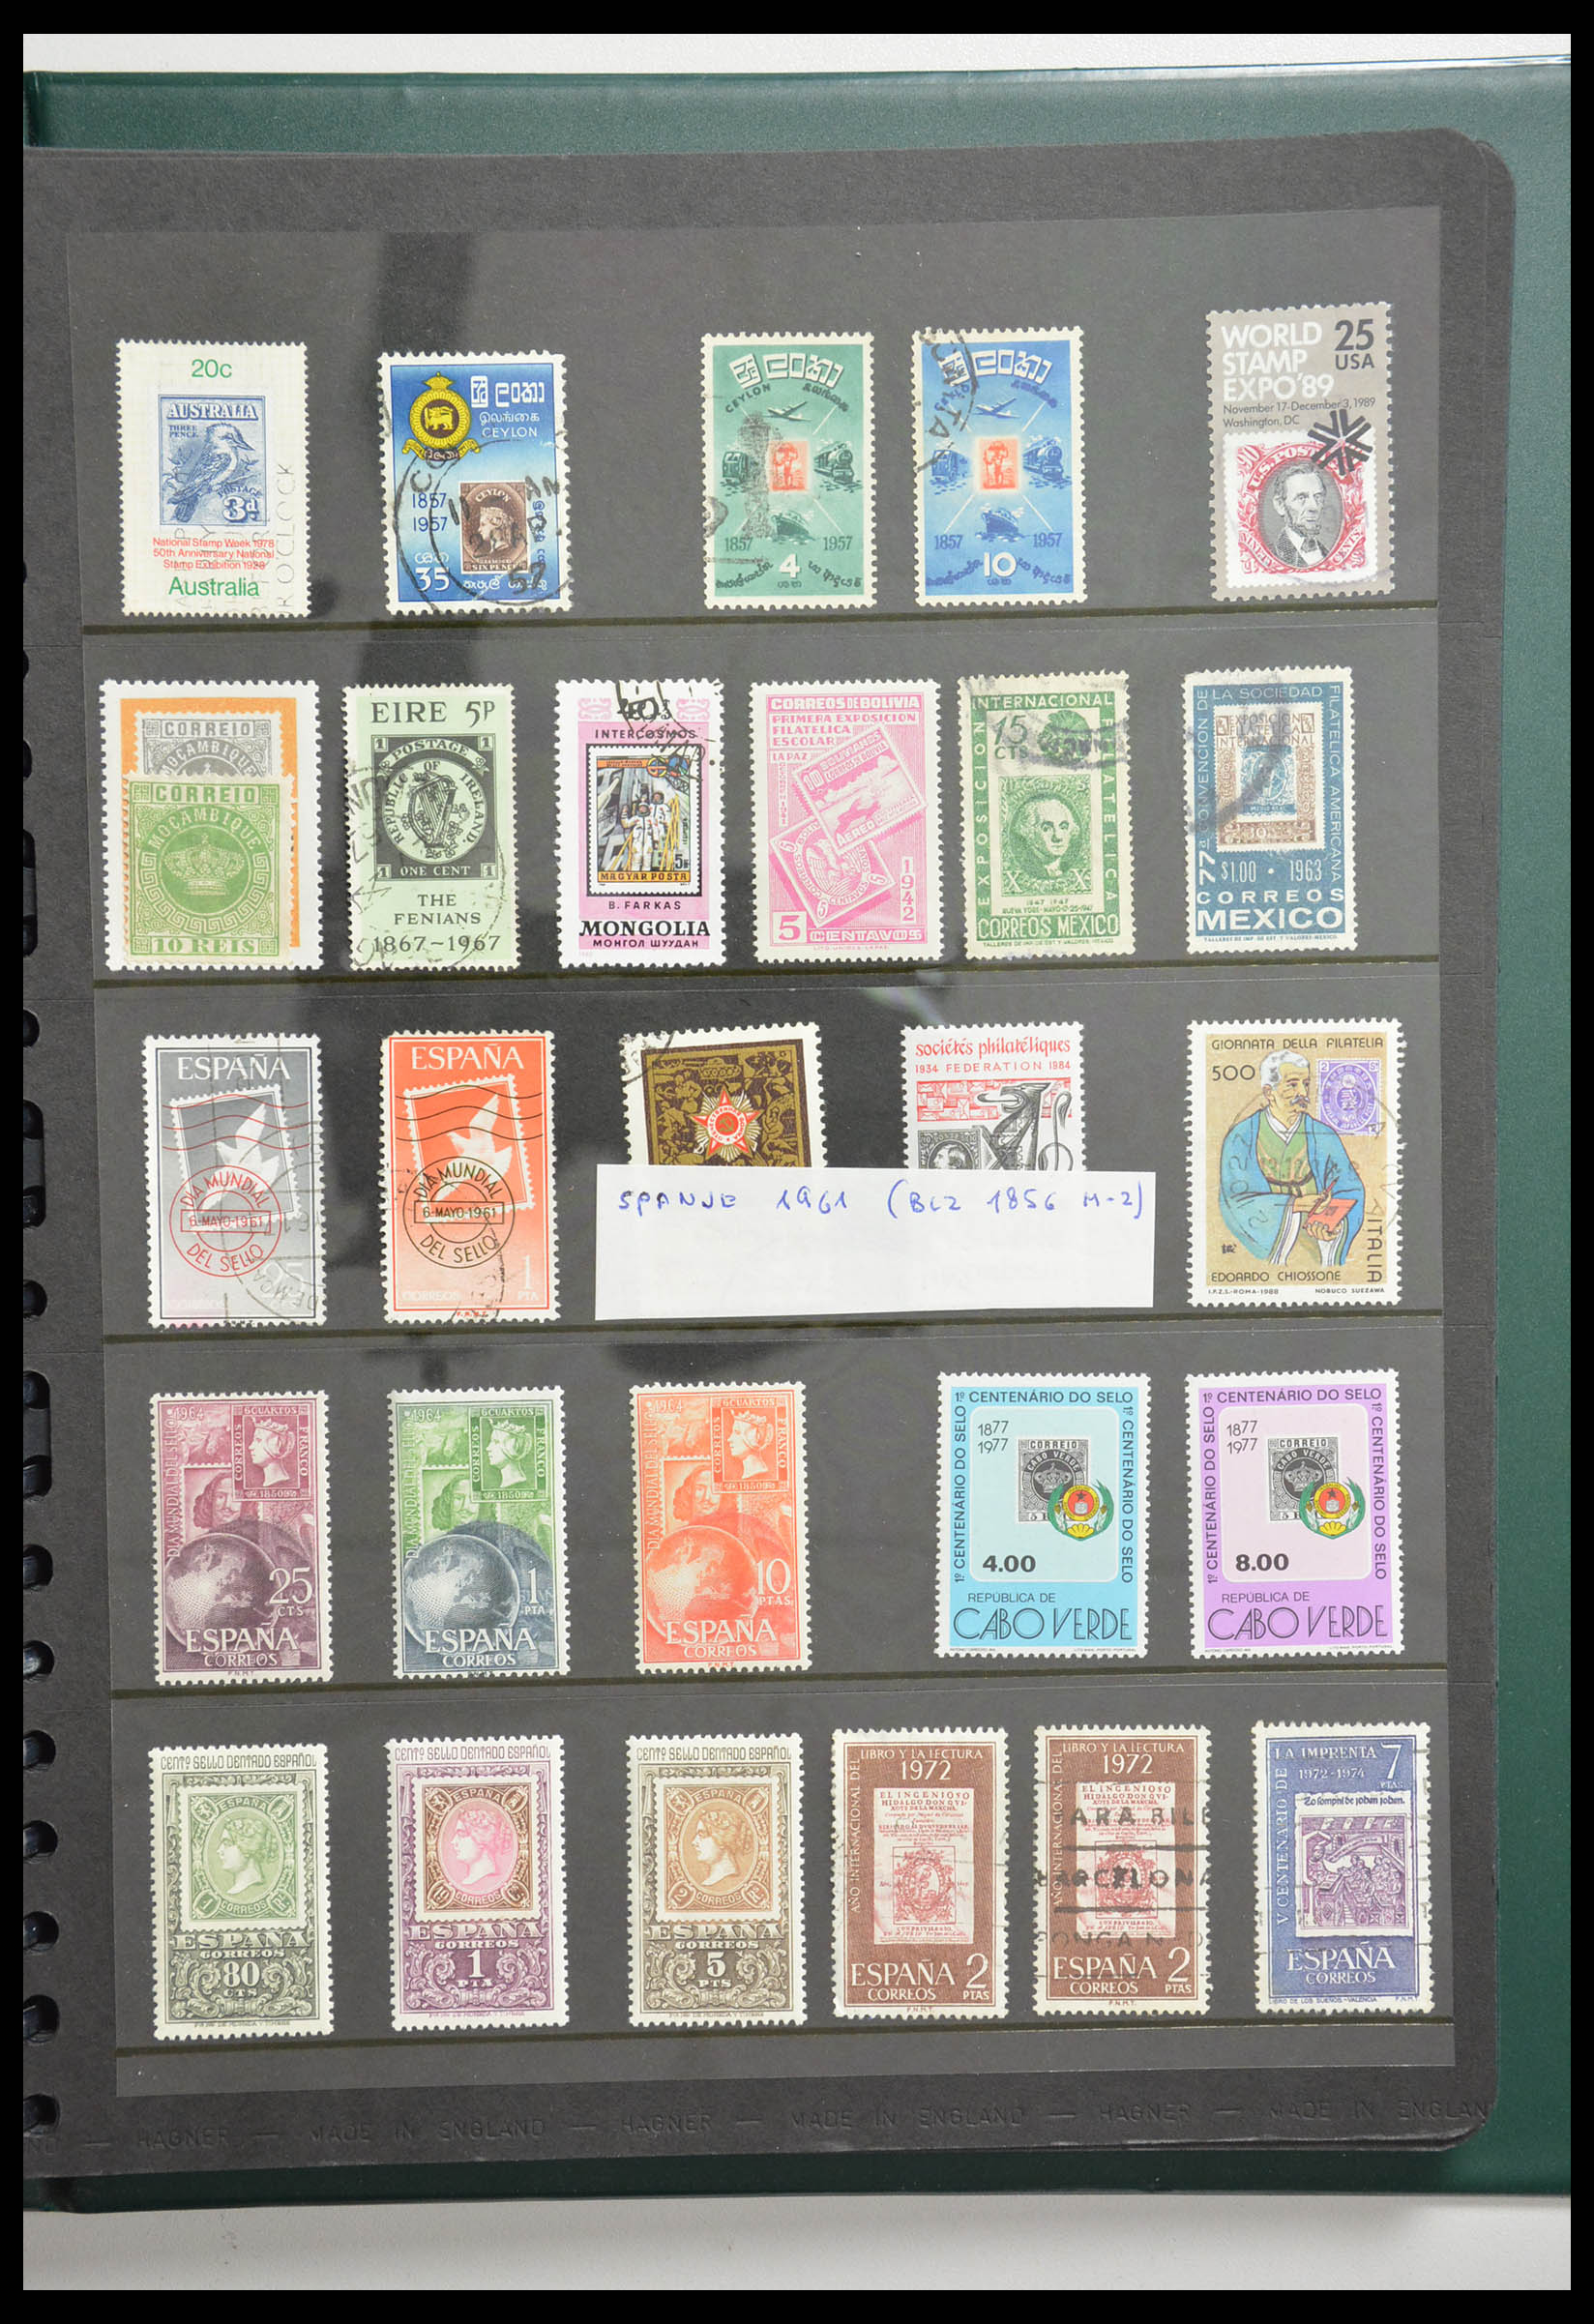 28337 067 - 28337 Postzegel op postzegel 1840-2001.